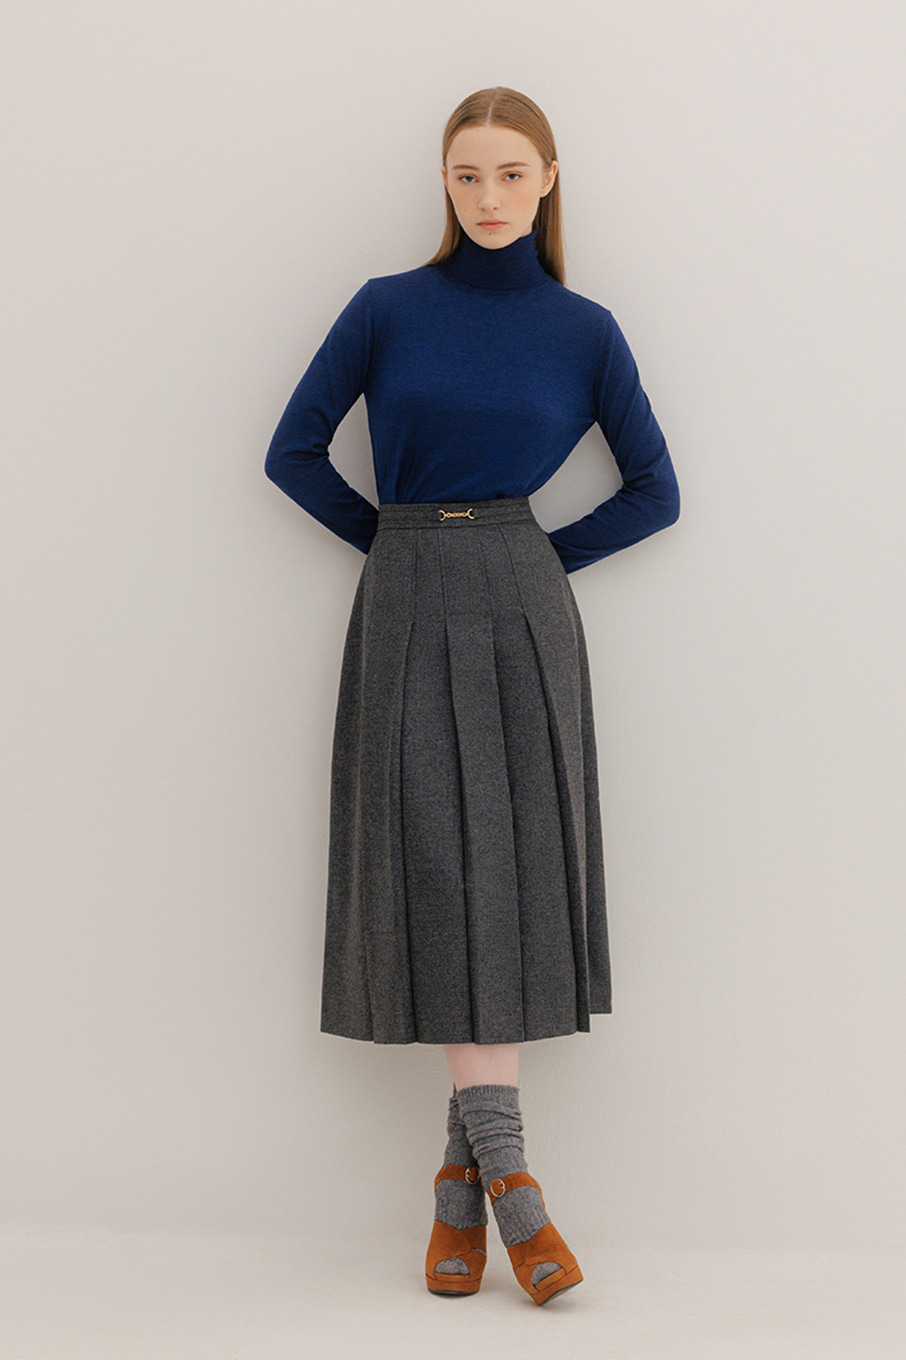 Mocri skirt (gray) 3차 리오더 김희애 홍수현 착용